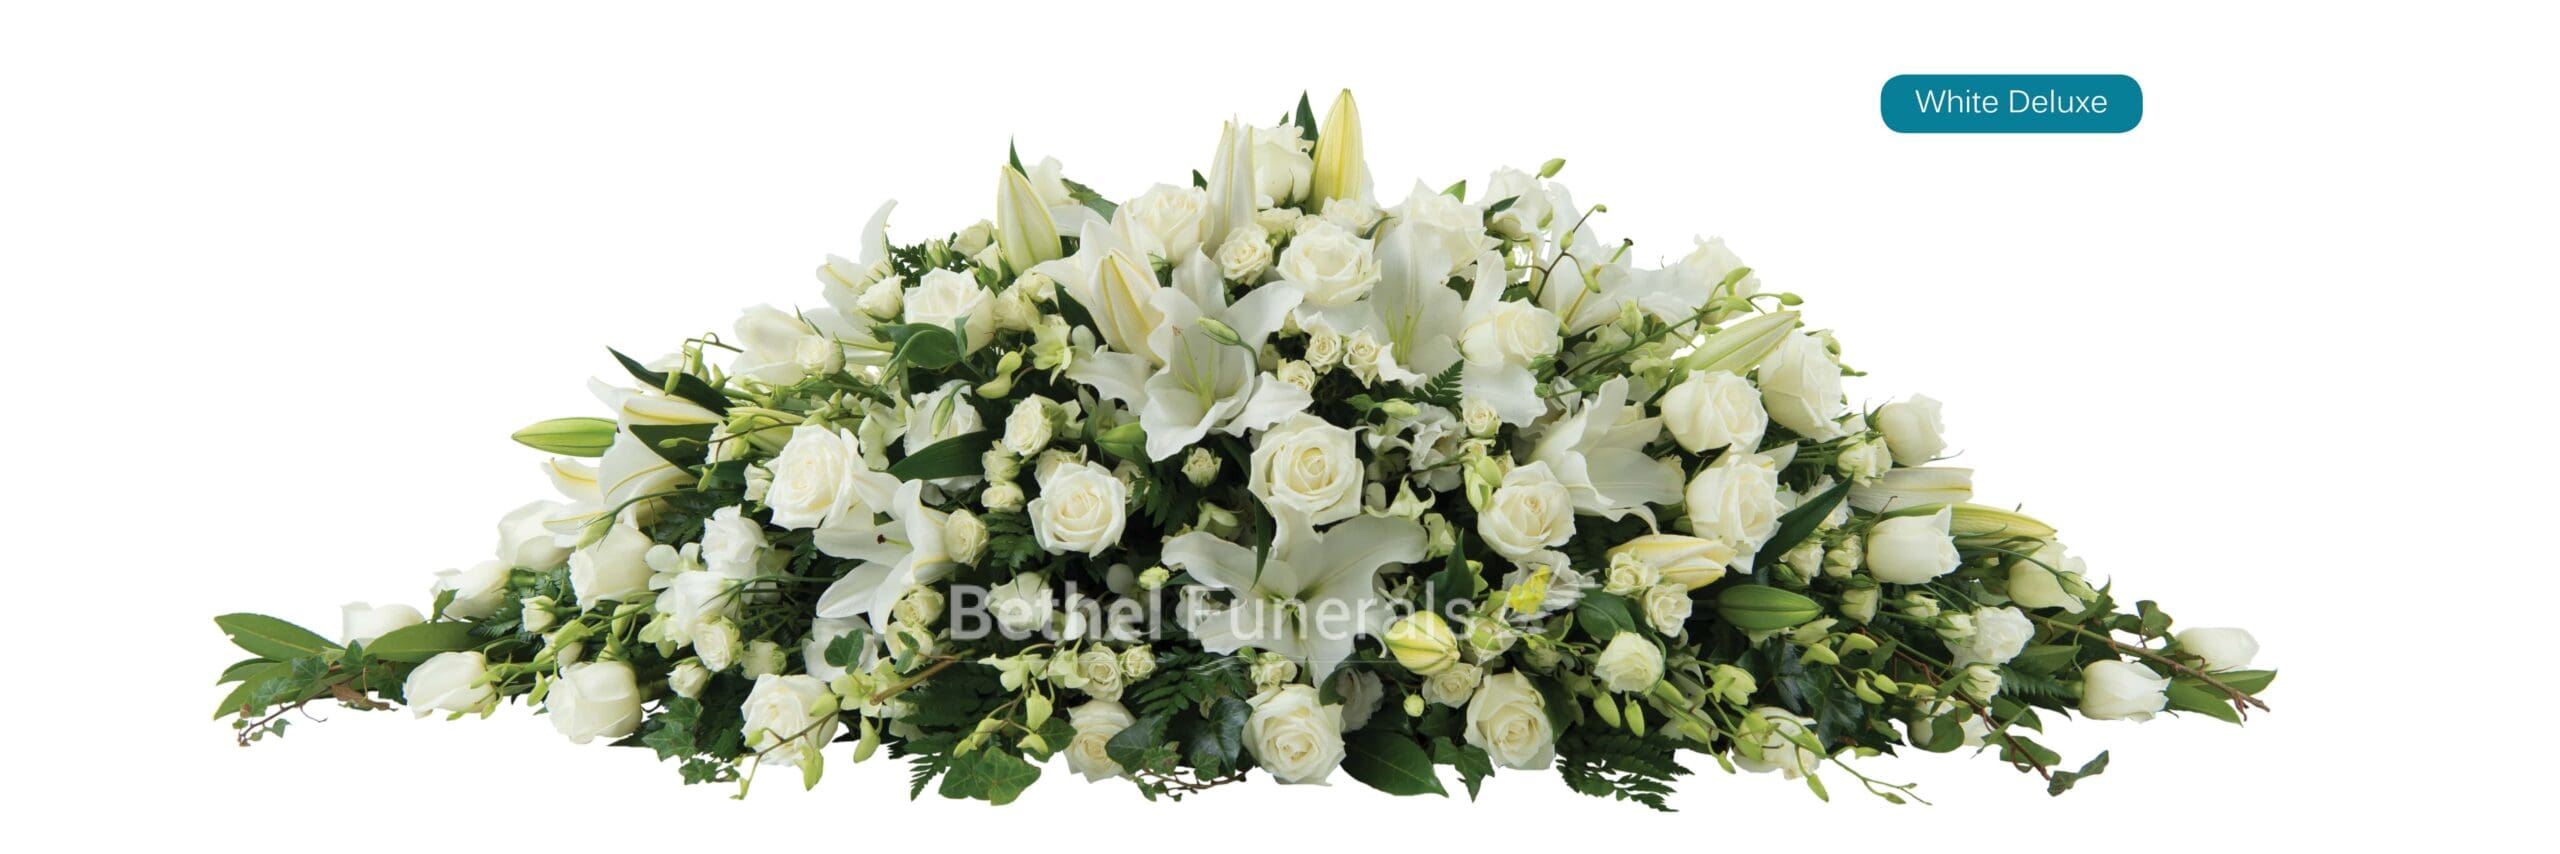 White Deluxe funeral Flower arrangement on coffin